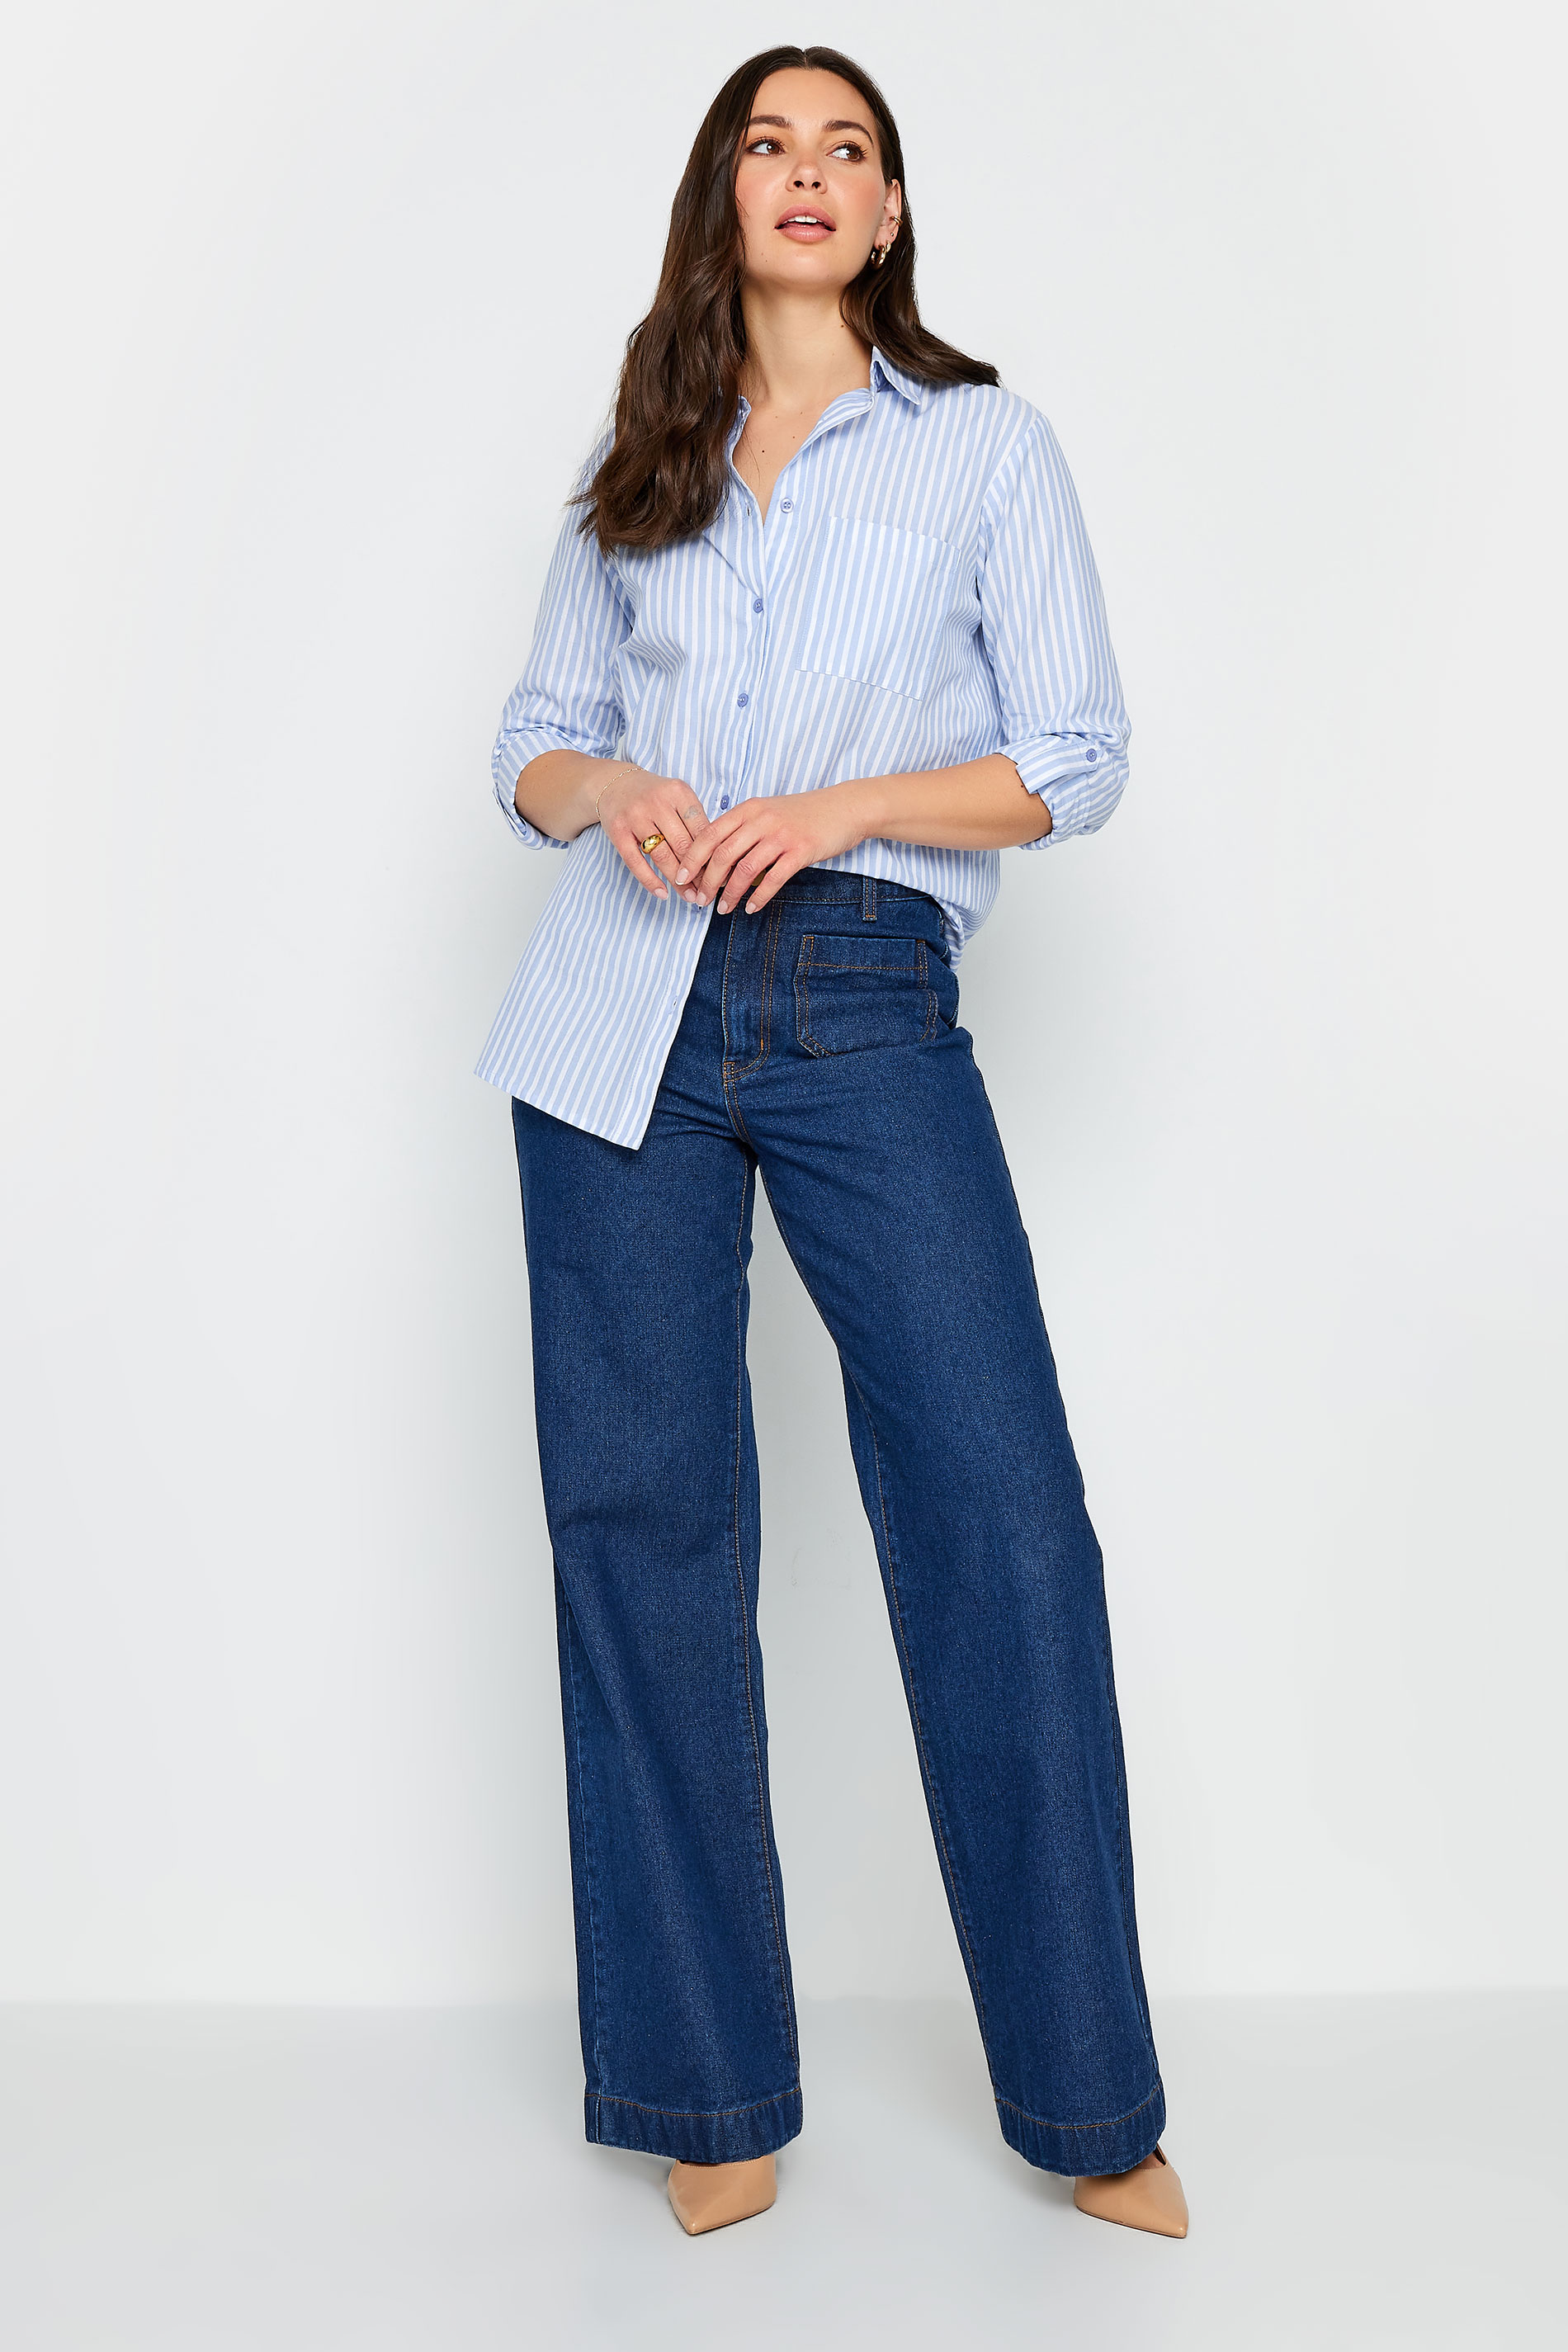 LTS Tall Womens Blue Stripe Shirt | Long Tall Sally 2